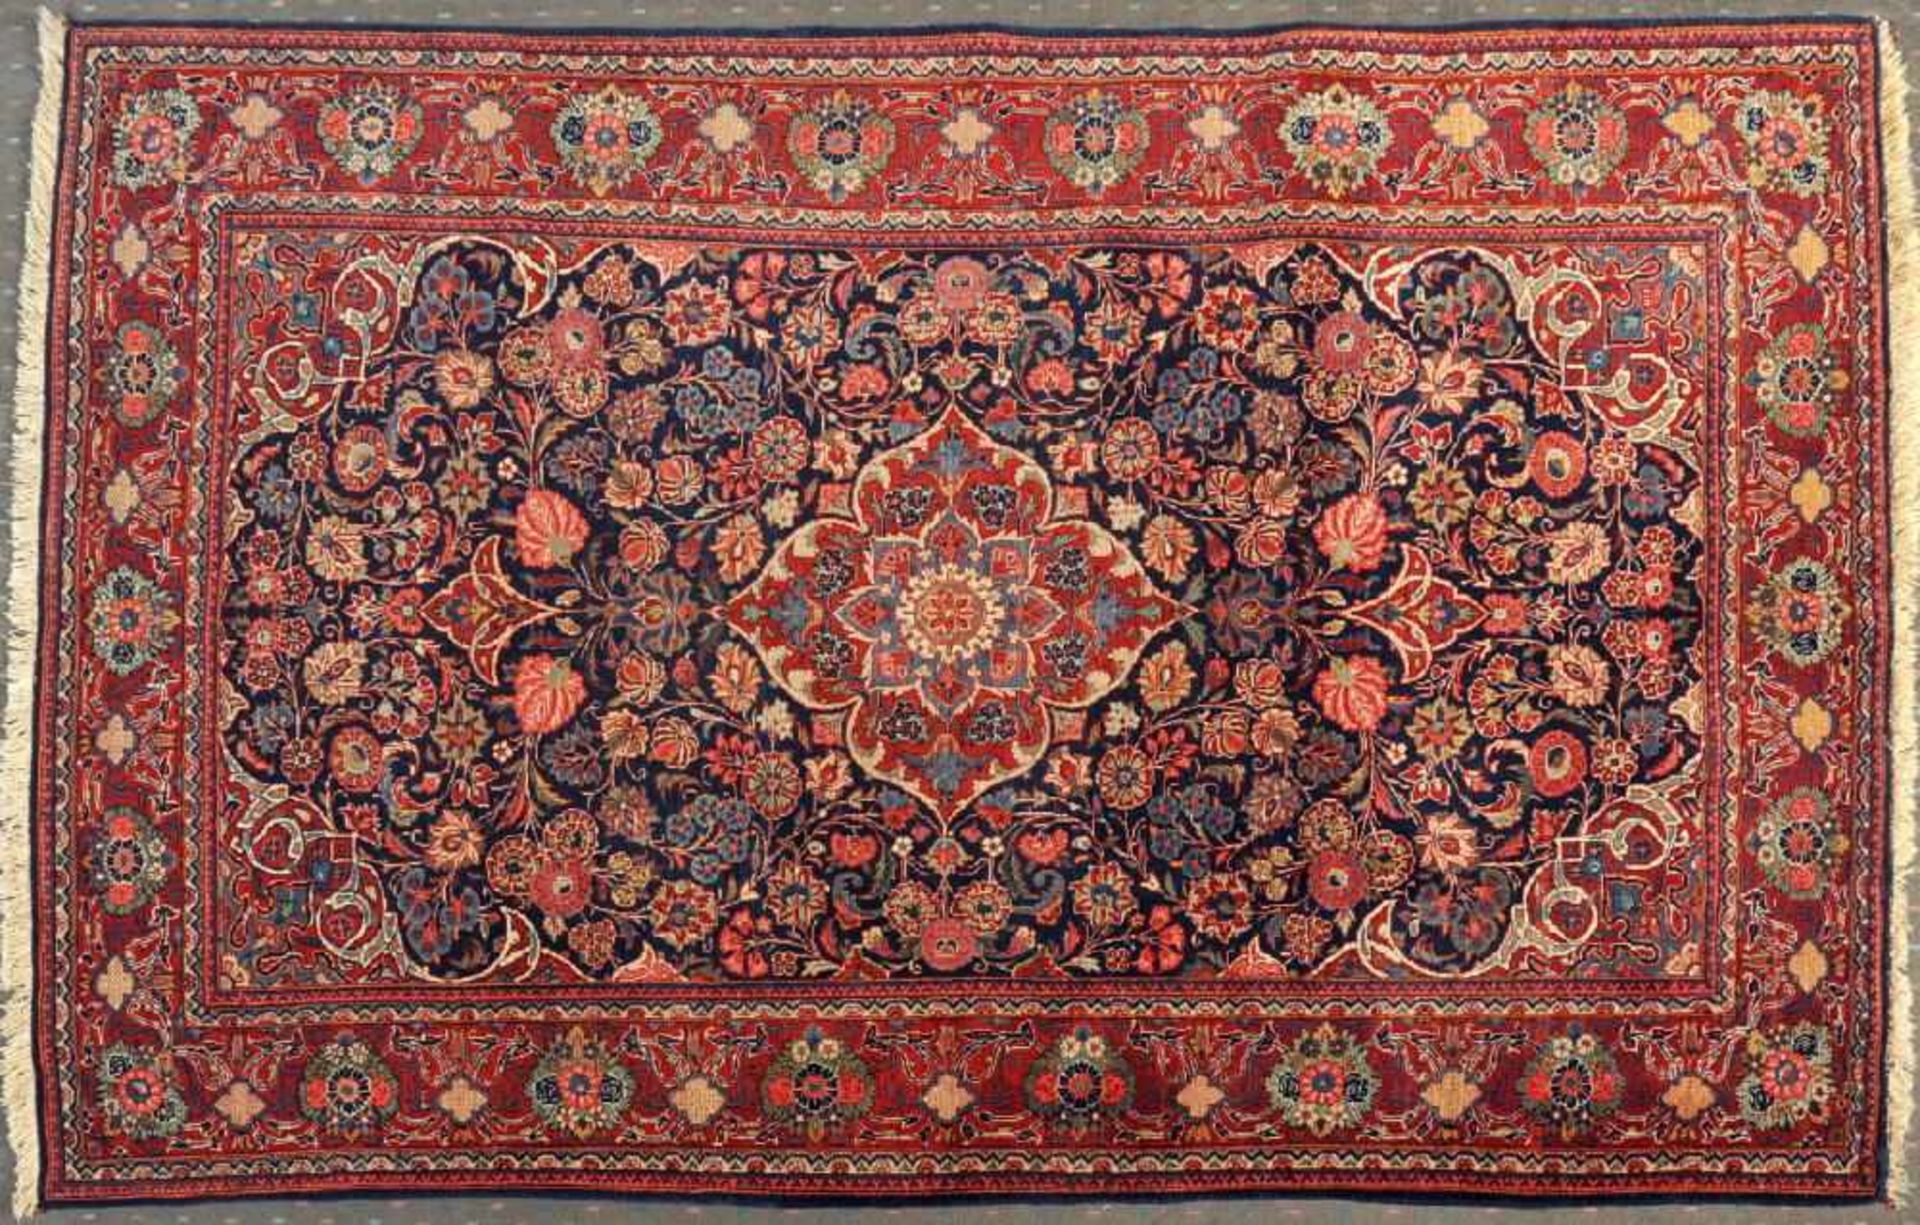 Keschan, Persien, 126 x 205 cmälter, Wolle, dunkelblaugrundig, mehrfarb. Medaillon, umgeben von